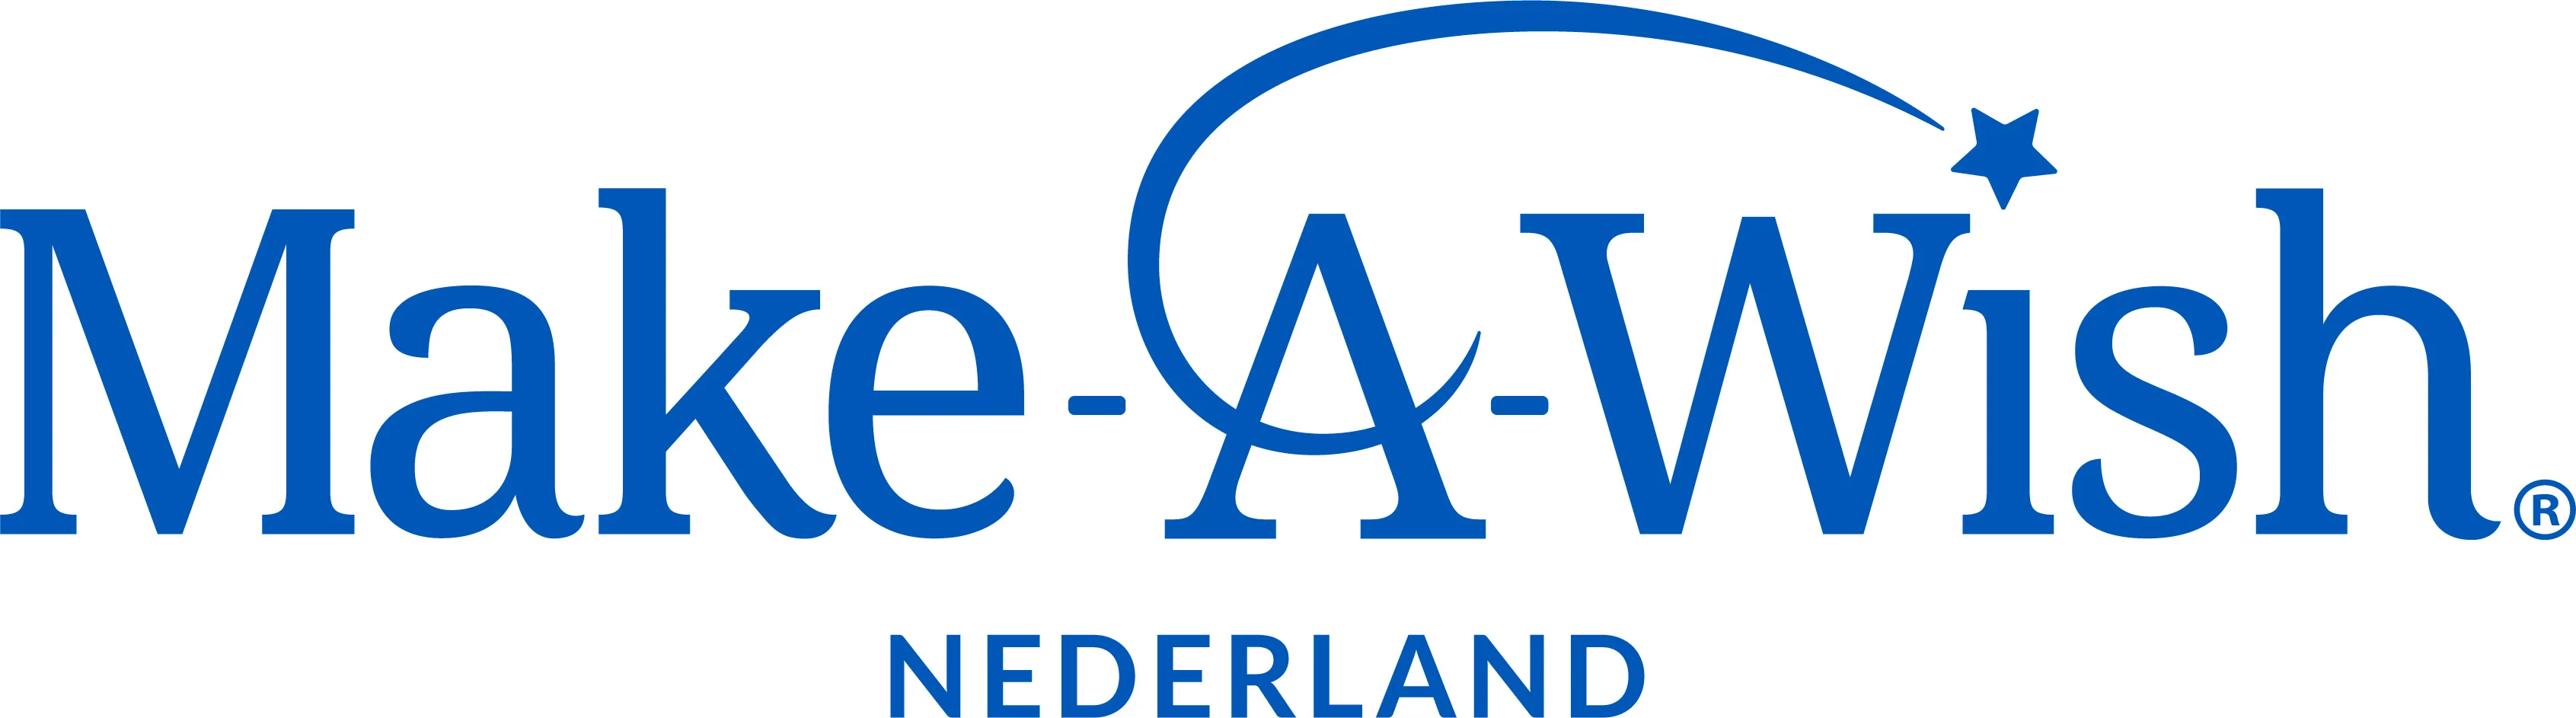 Make-A-Wish® Nederland